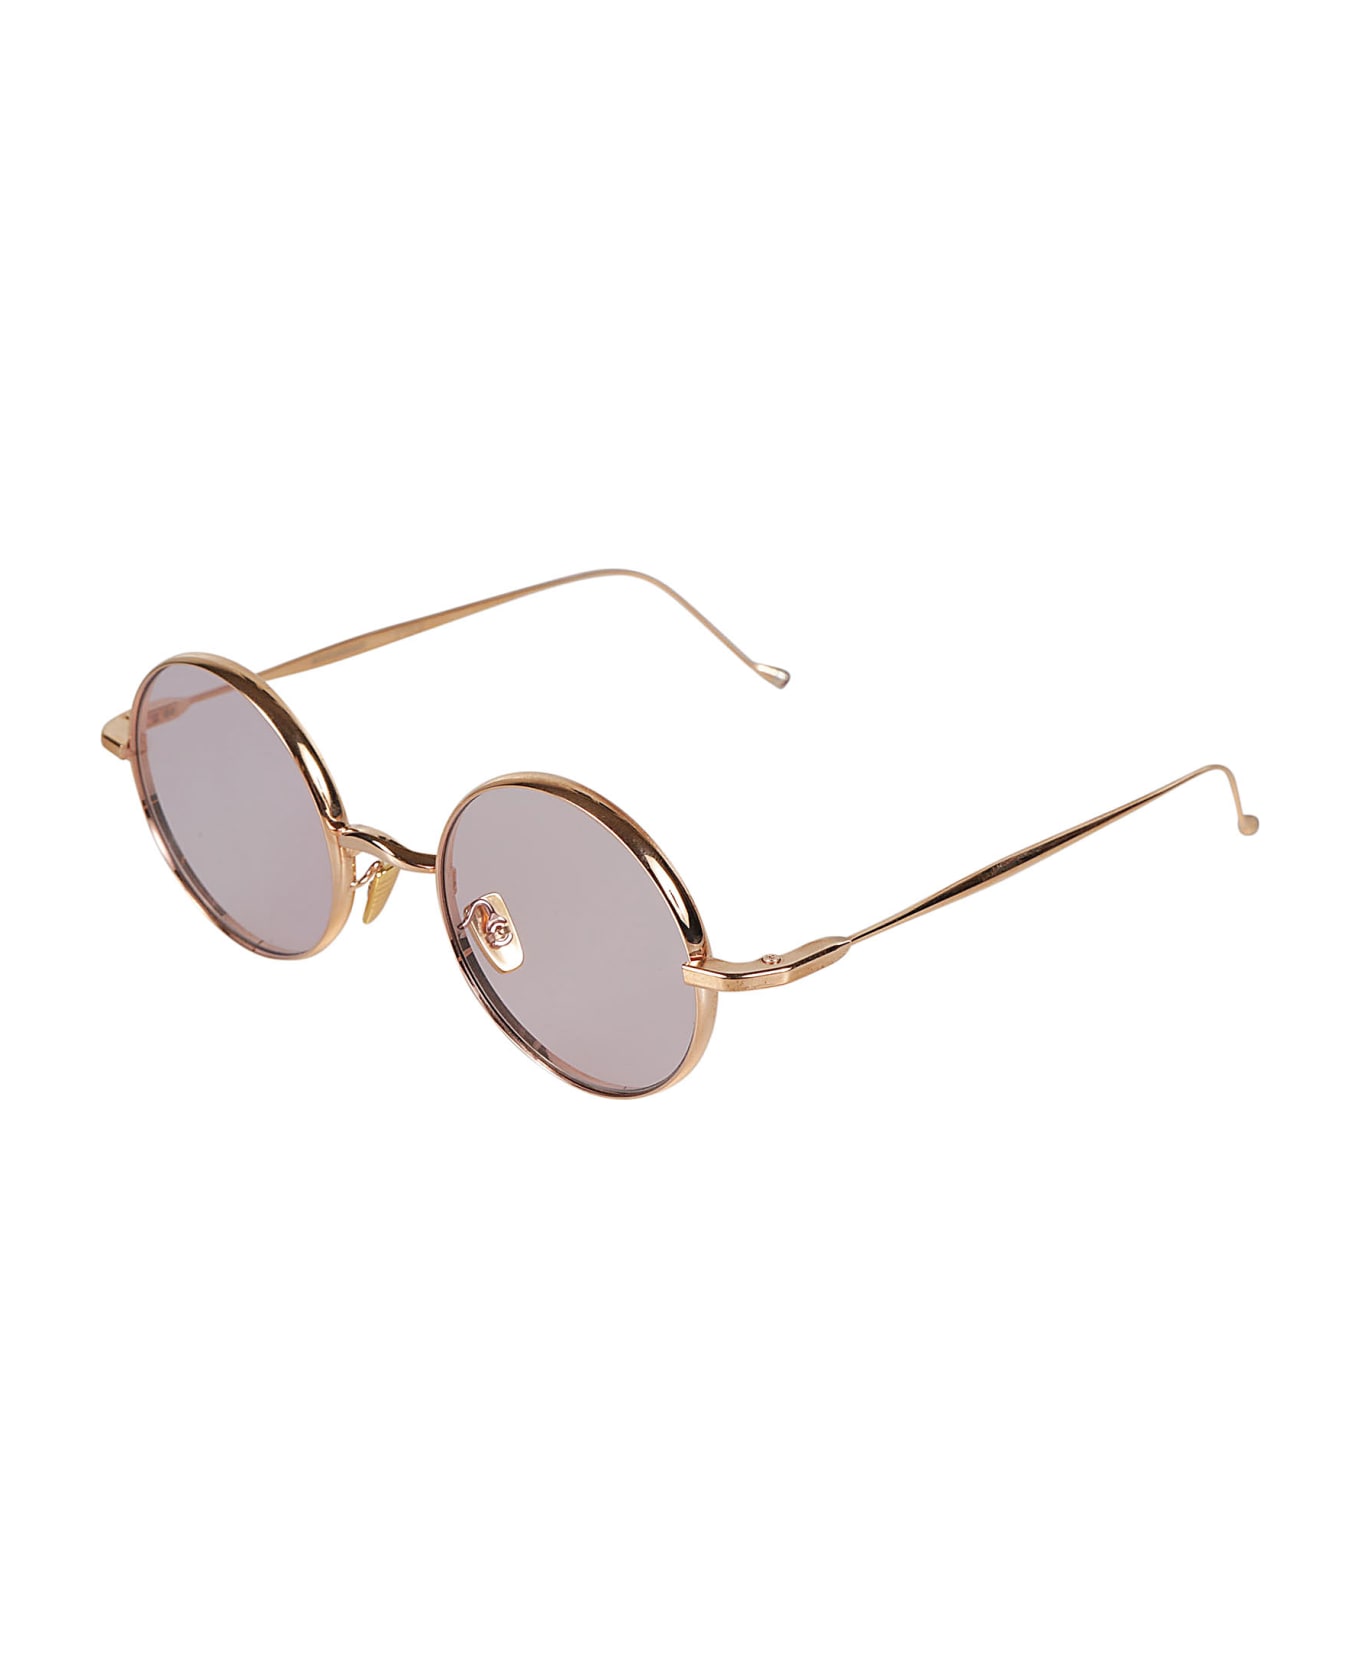 Jacques Marie Mage Diana Sunglasses Sunglasses - Rose Gold